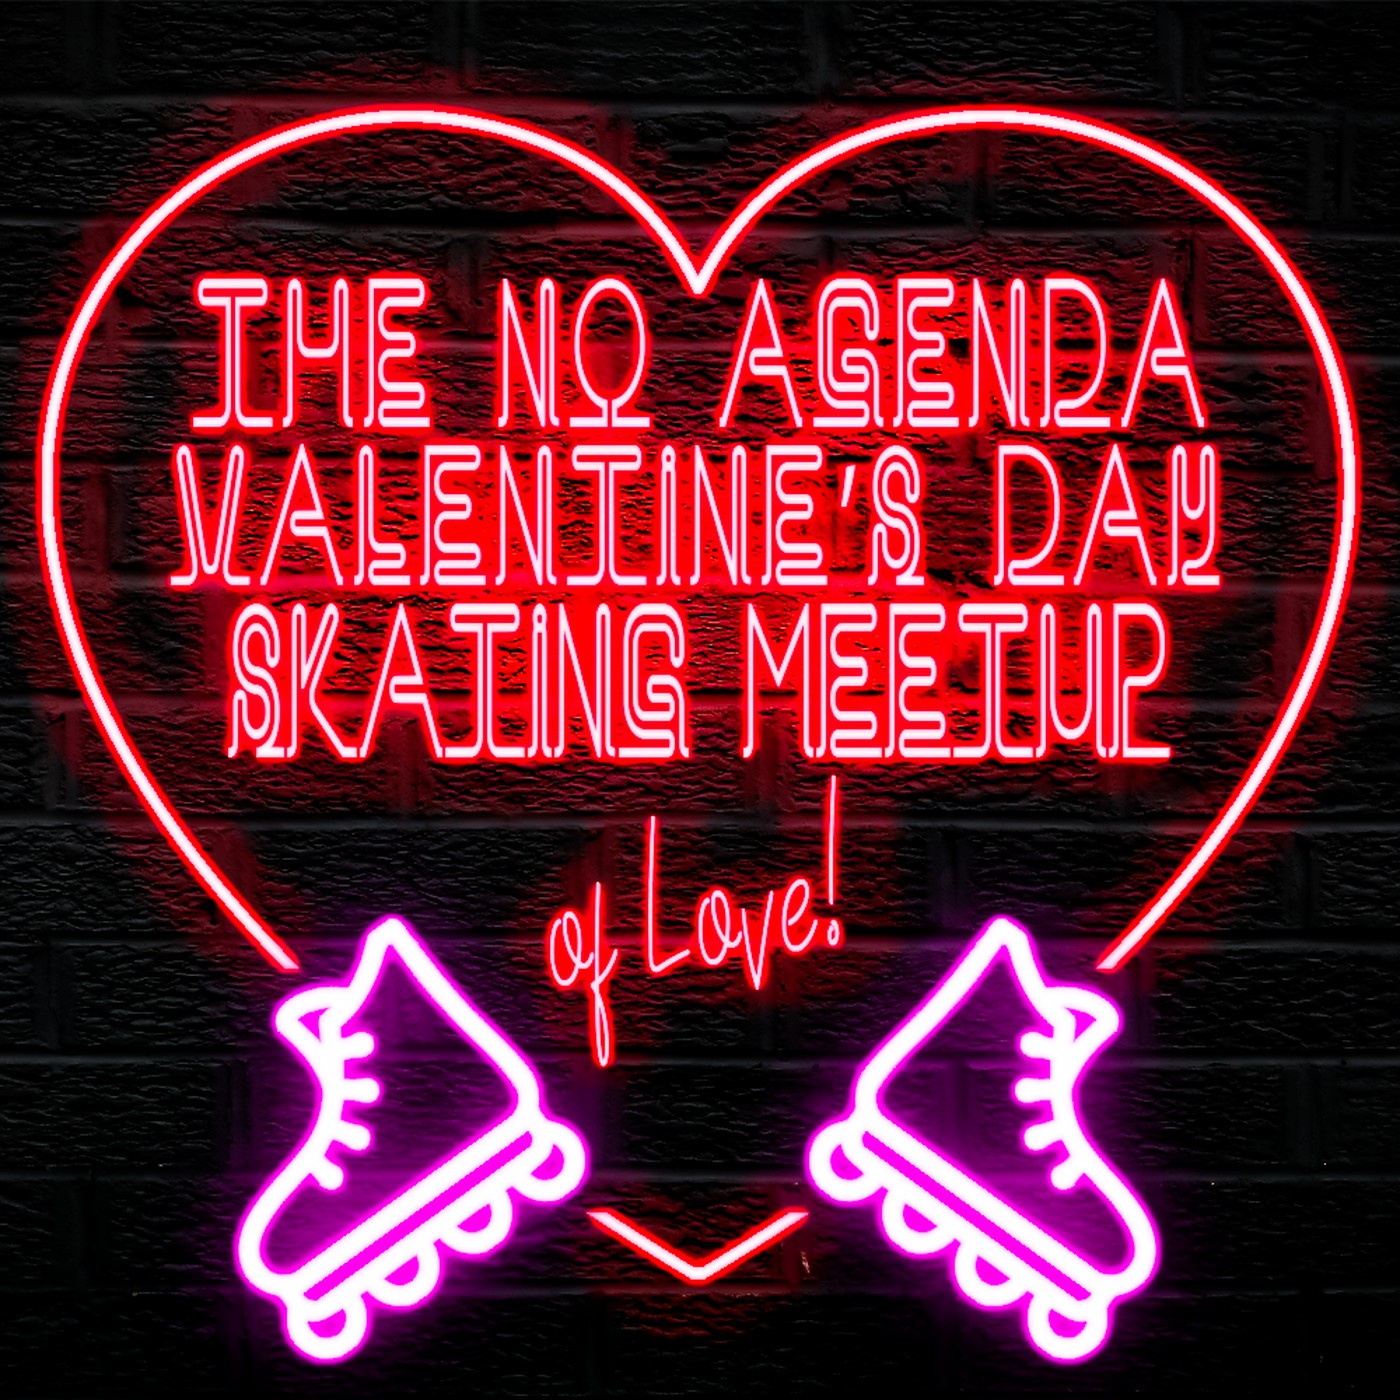 The No Agenda Valentine’s Day Skating Meetup of Love!